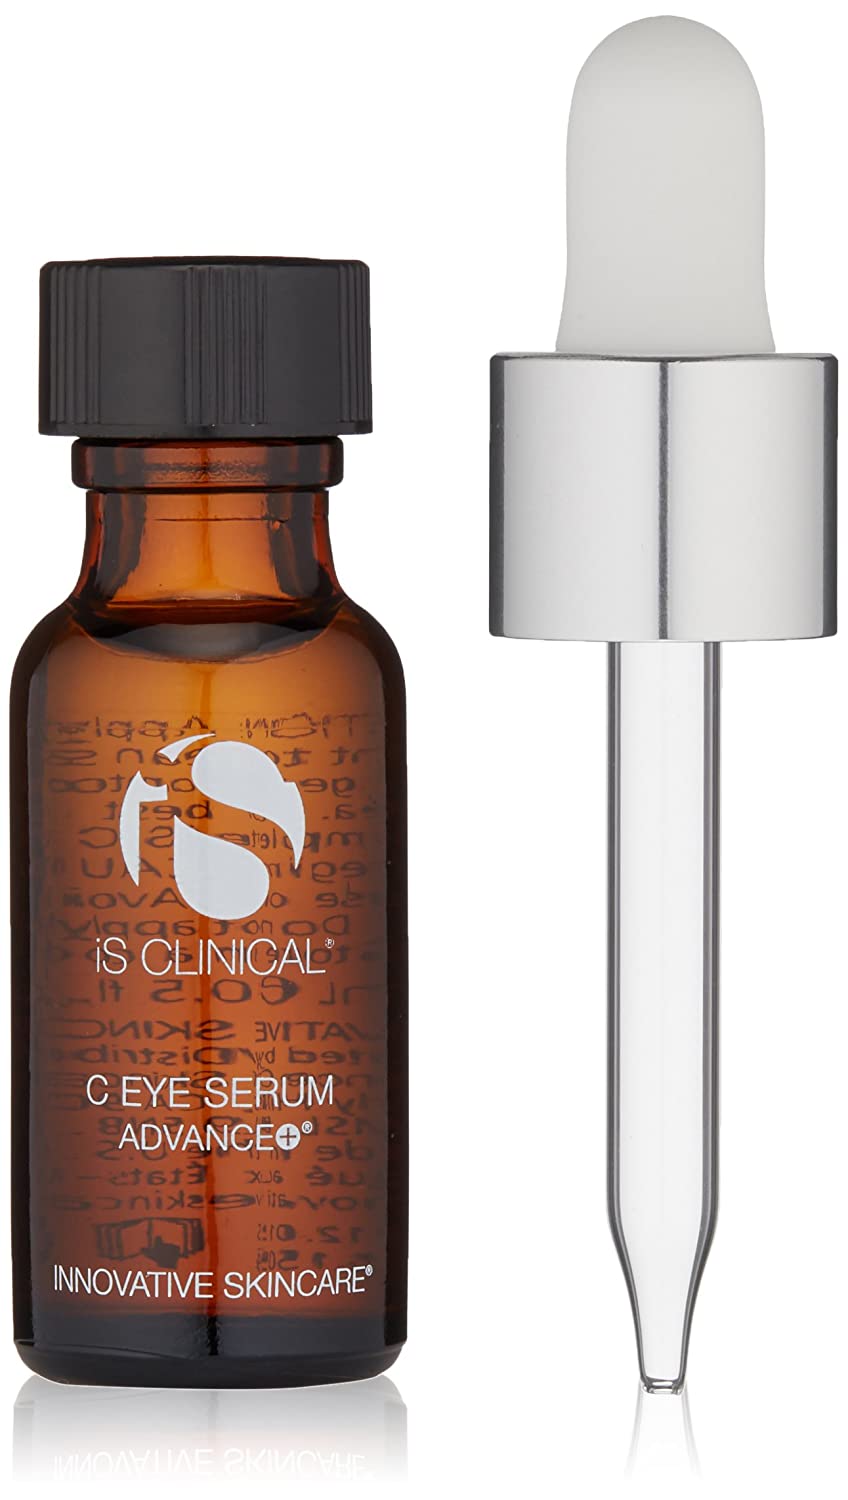 IsClinical C Eye Serum Advance+ - Totality Skincare